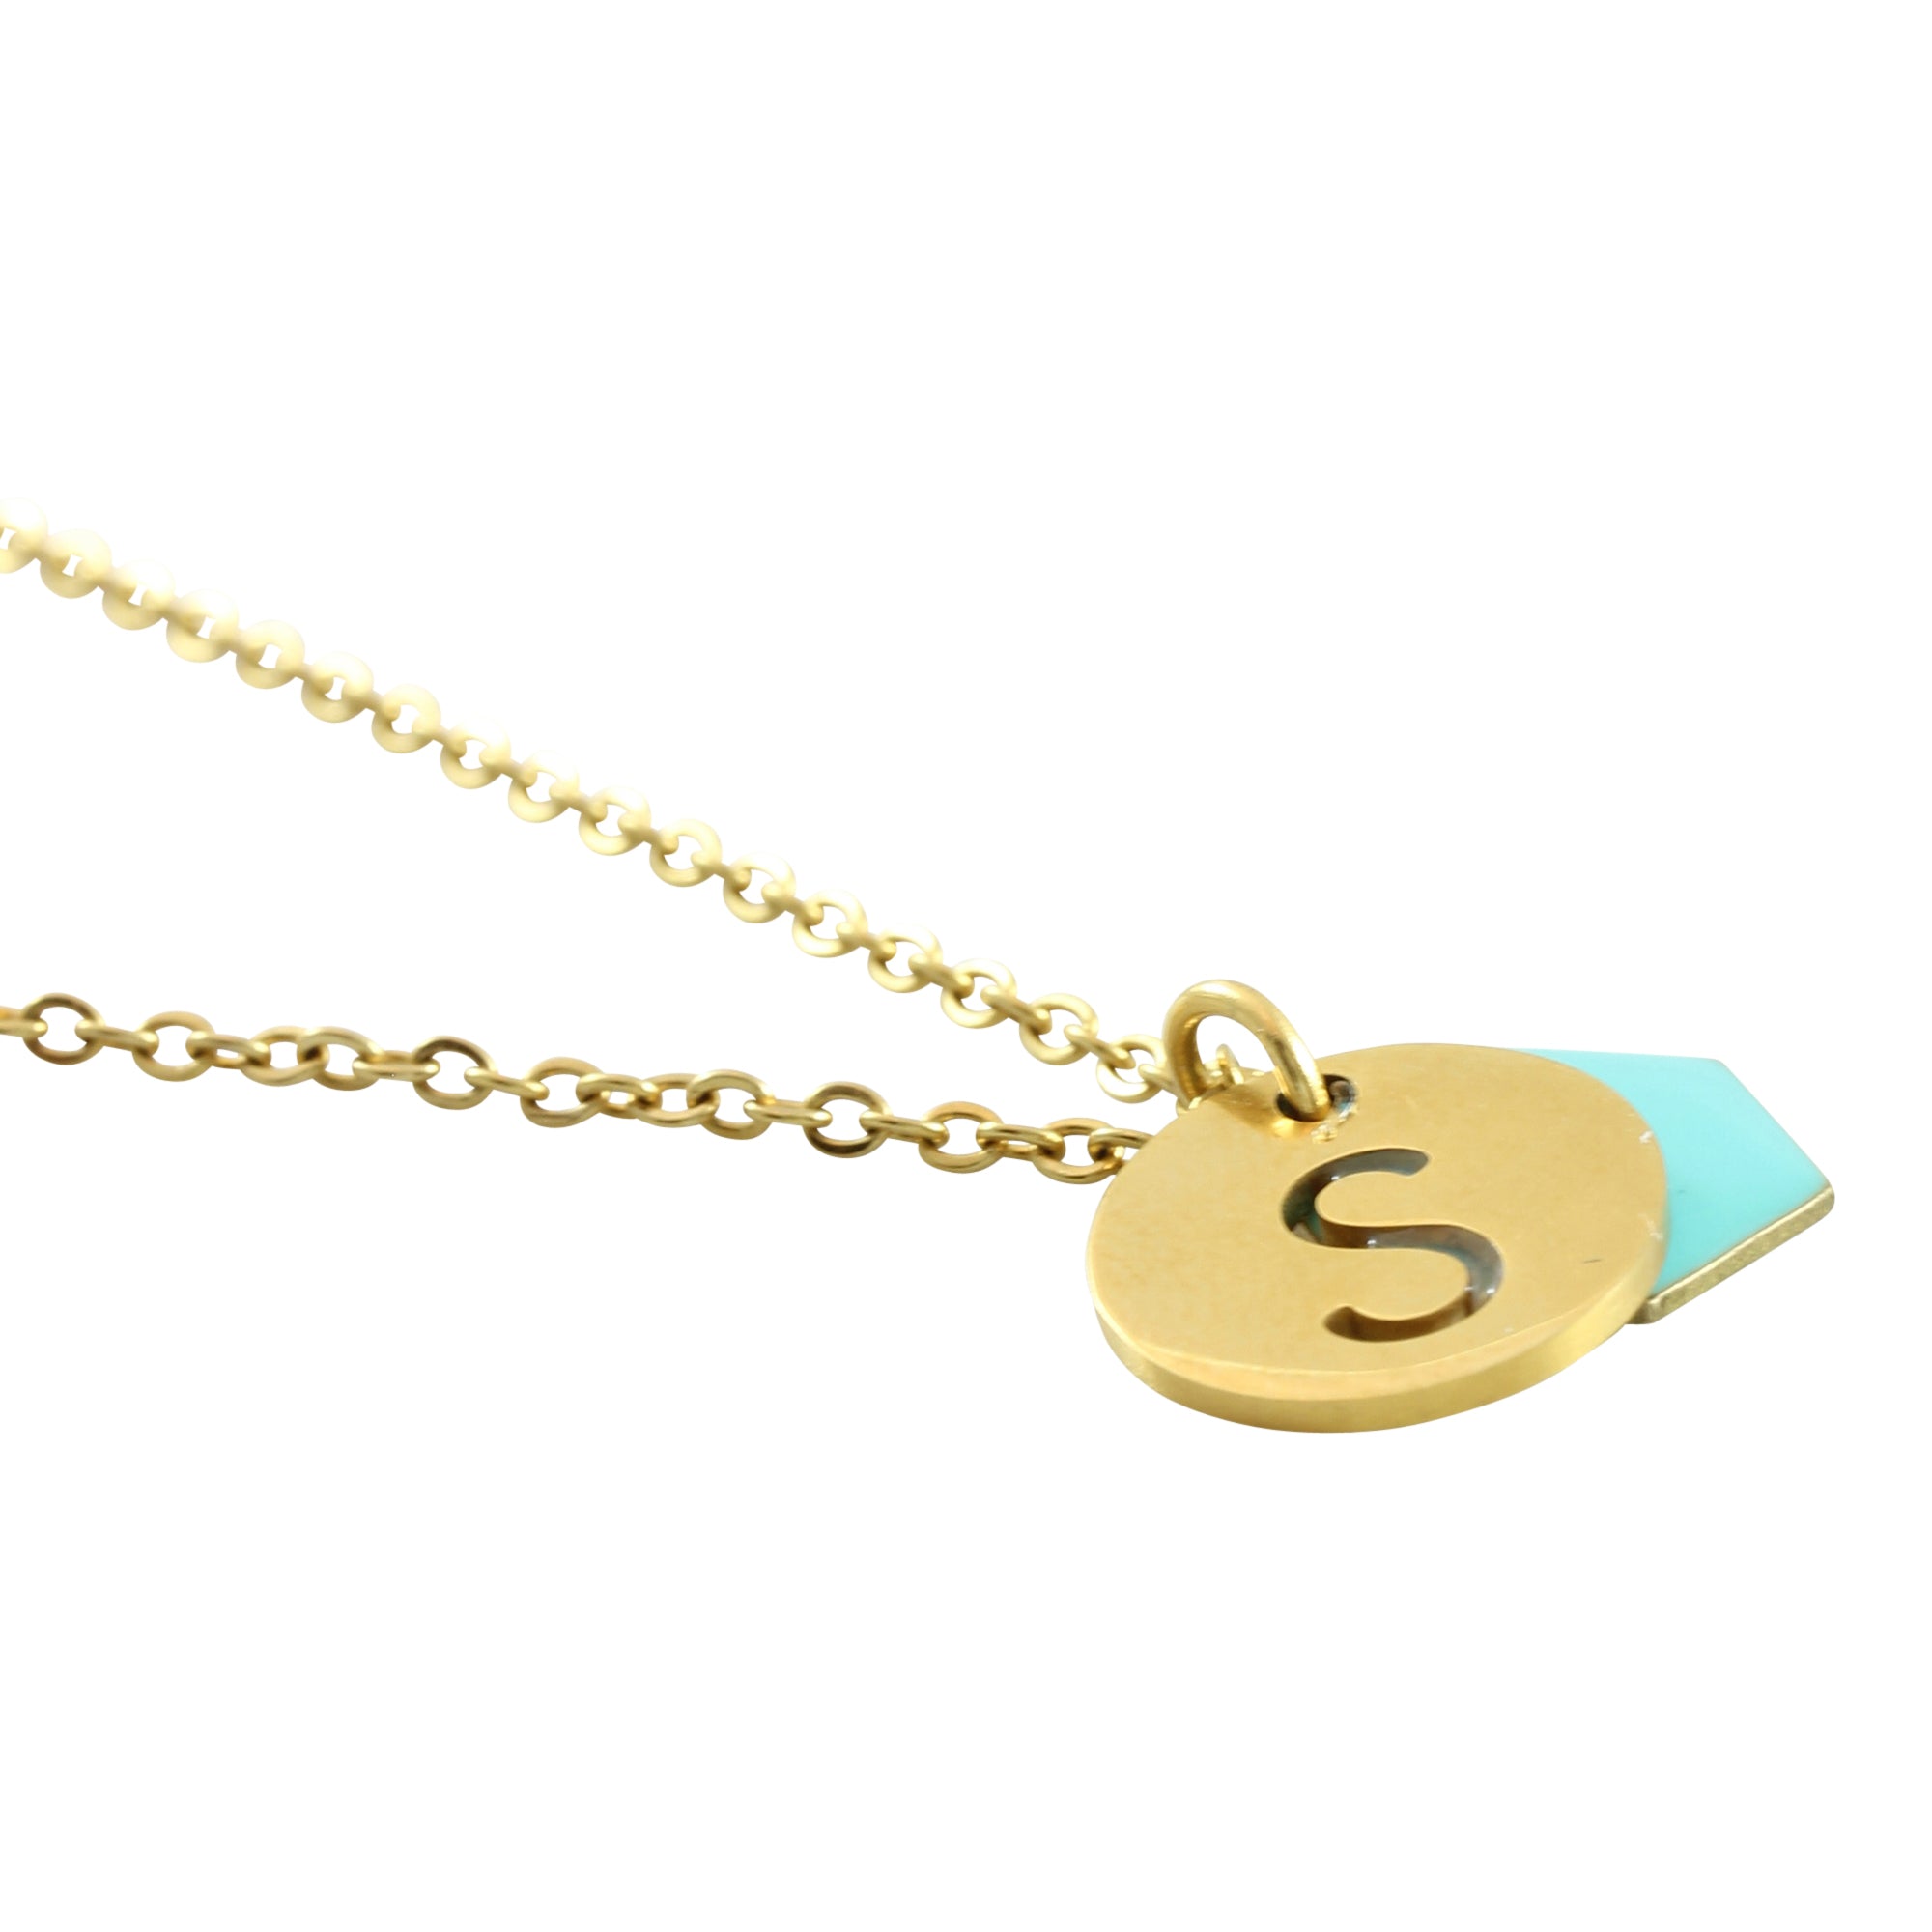 "Le Délice" Waterproof "Imperméable” Personalized Initial Gold Necklace with Aqua Enamel Charm